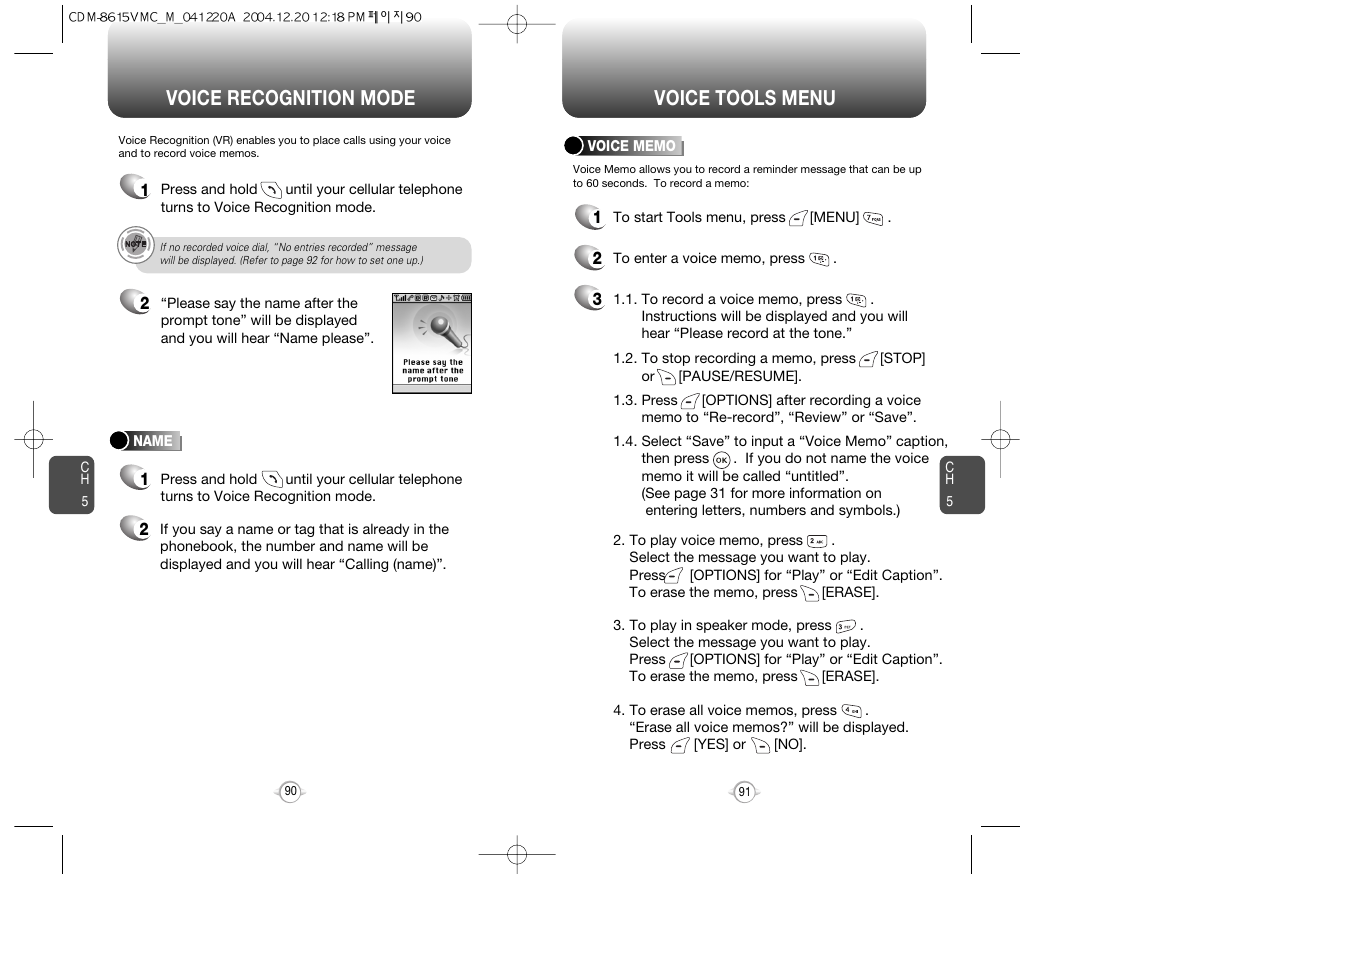 Voice tools menu, Voice recognition mode | UTStarcom CDM-8615 User Manual | Page 47 / 66